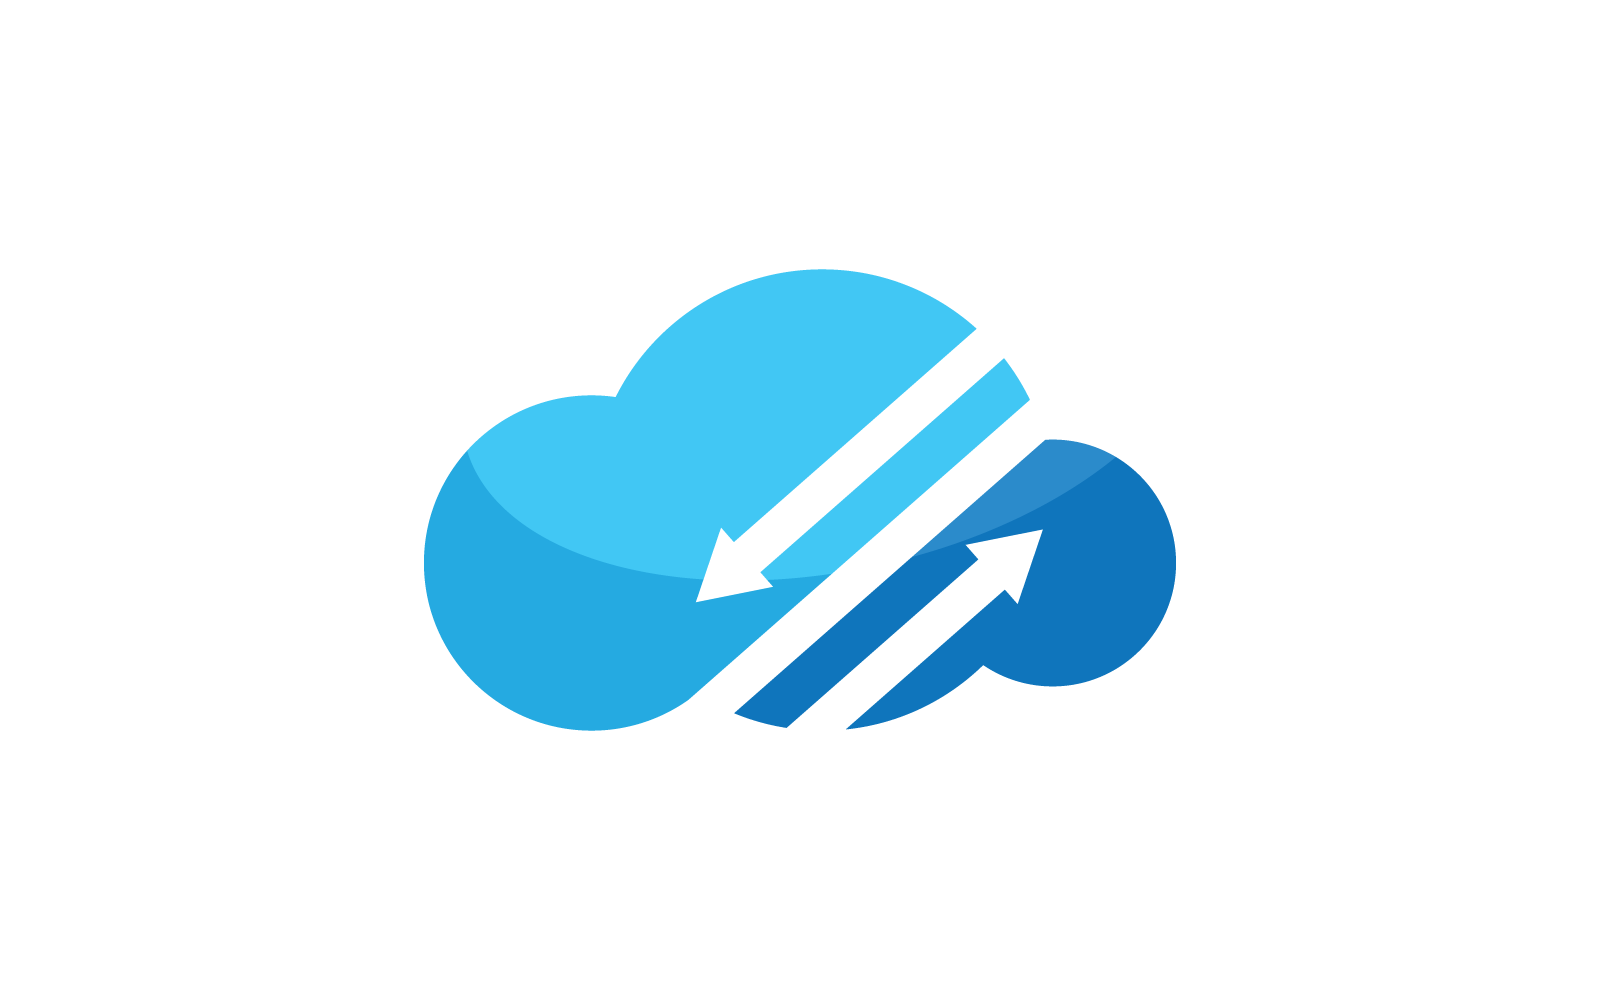 Cloud illustration logo icon vector template